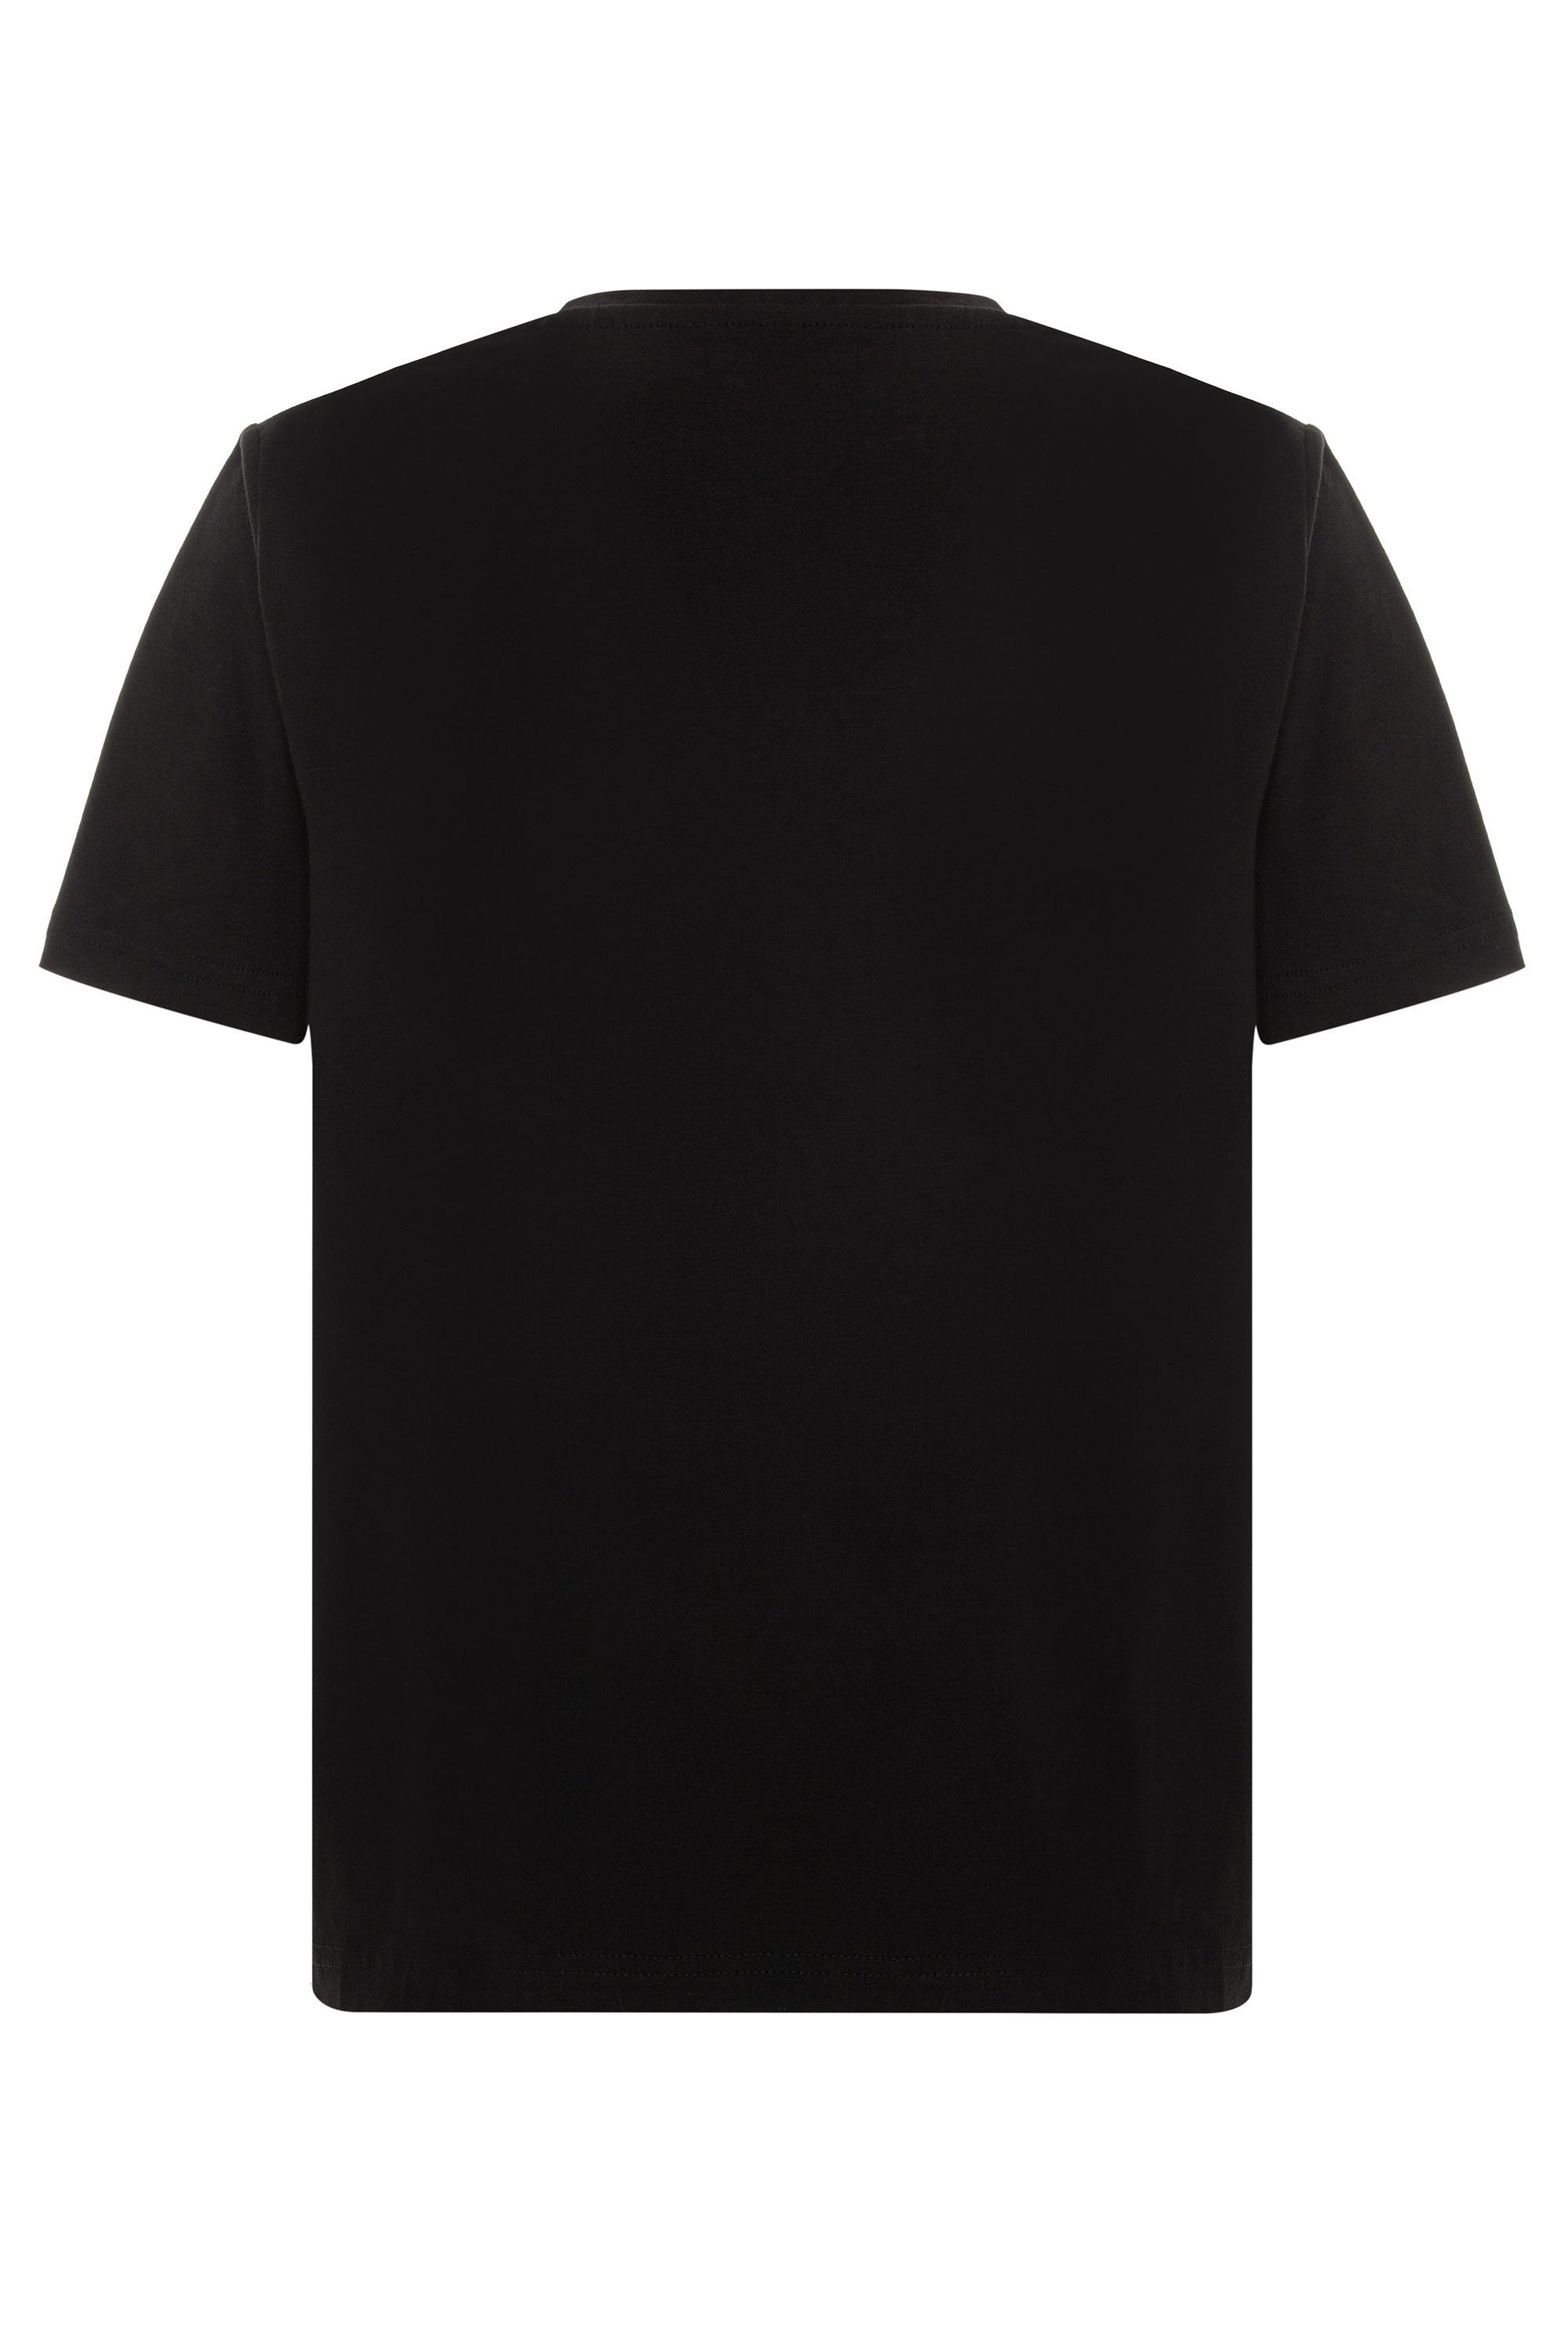 coolem schwarz-weiß T-Shirt mit Print Cipo & Baxx